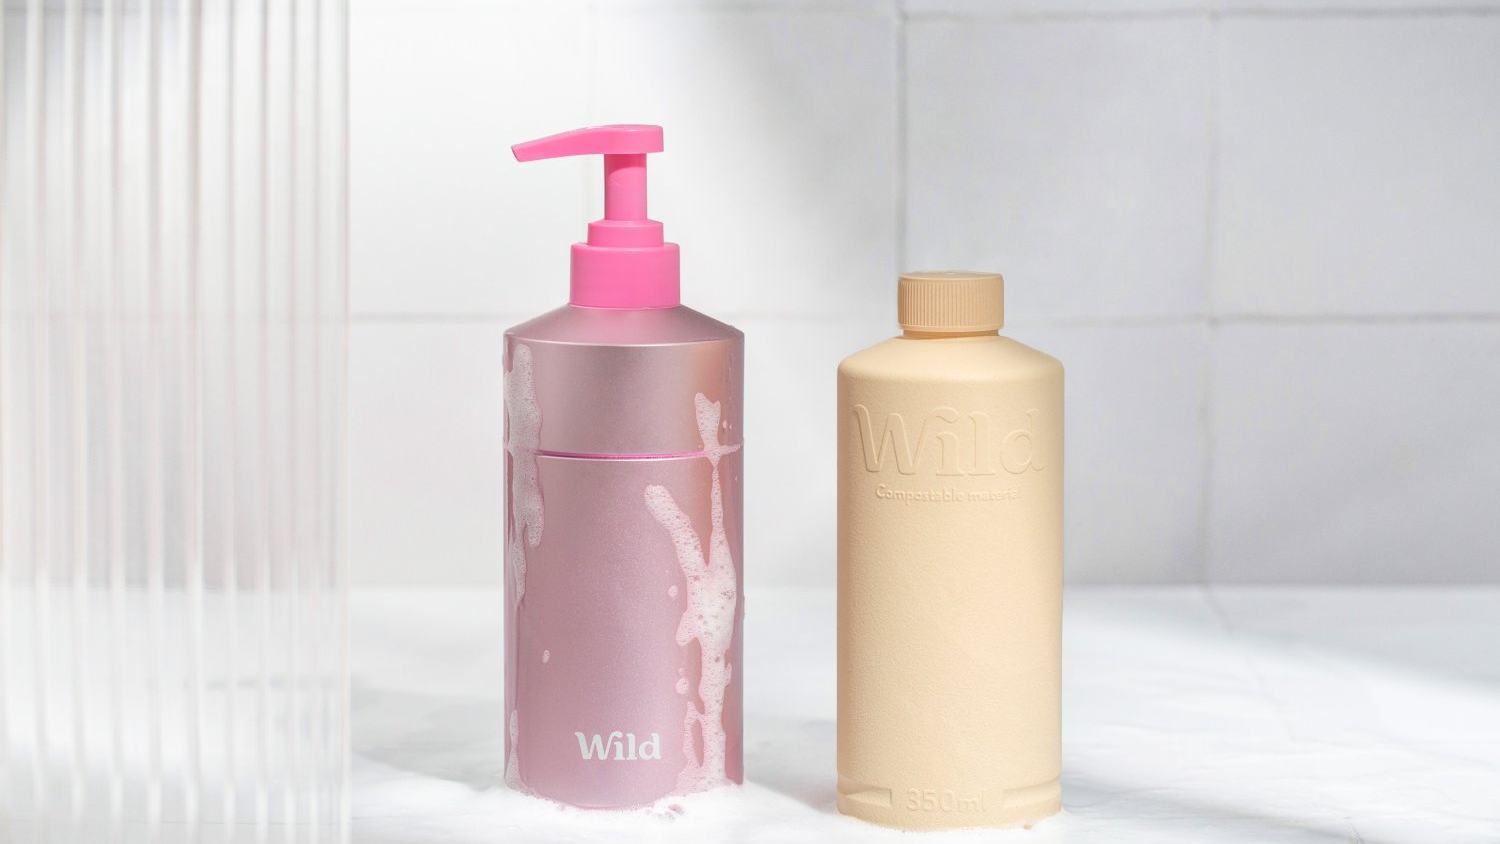 Wild Announces Refillable Shower Gel Dispenser System Designed By